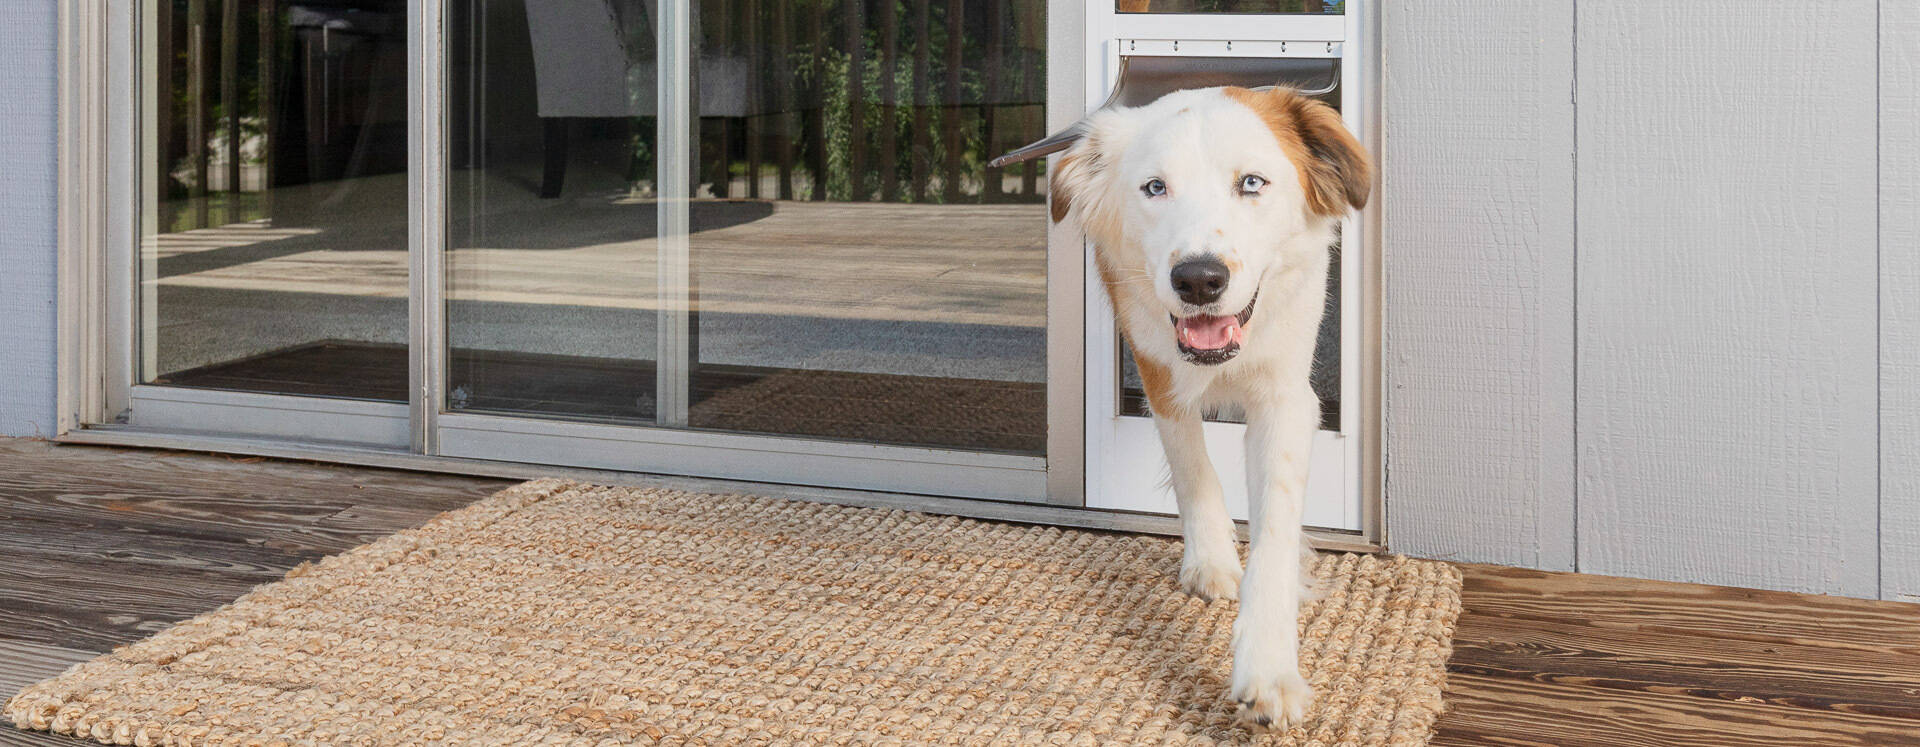 Sliding Door Dog Inserts, Automatic Dog Door Sliding Glass